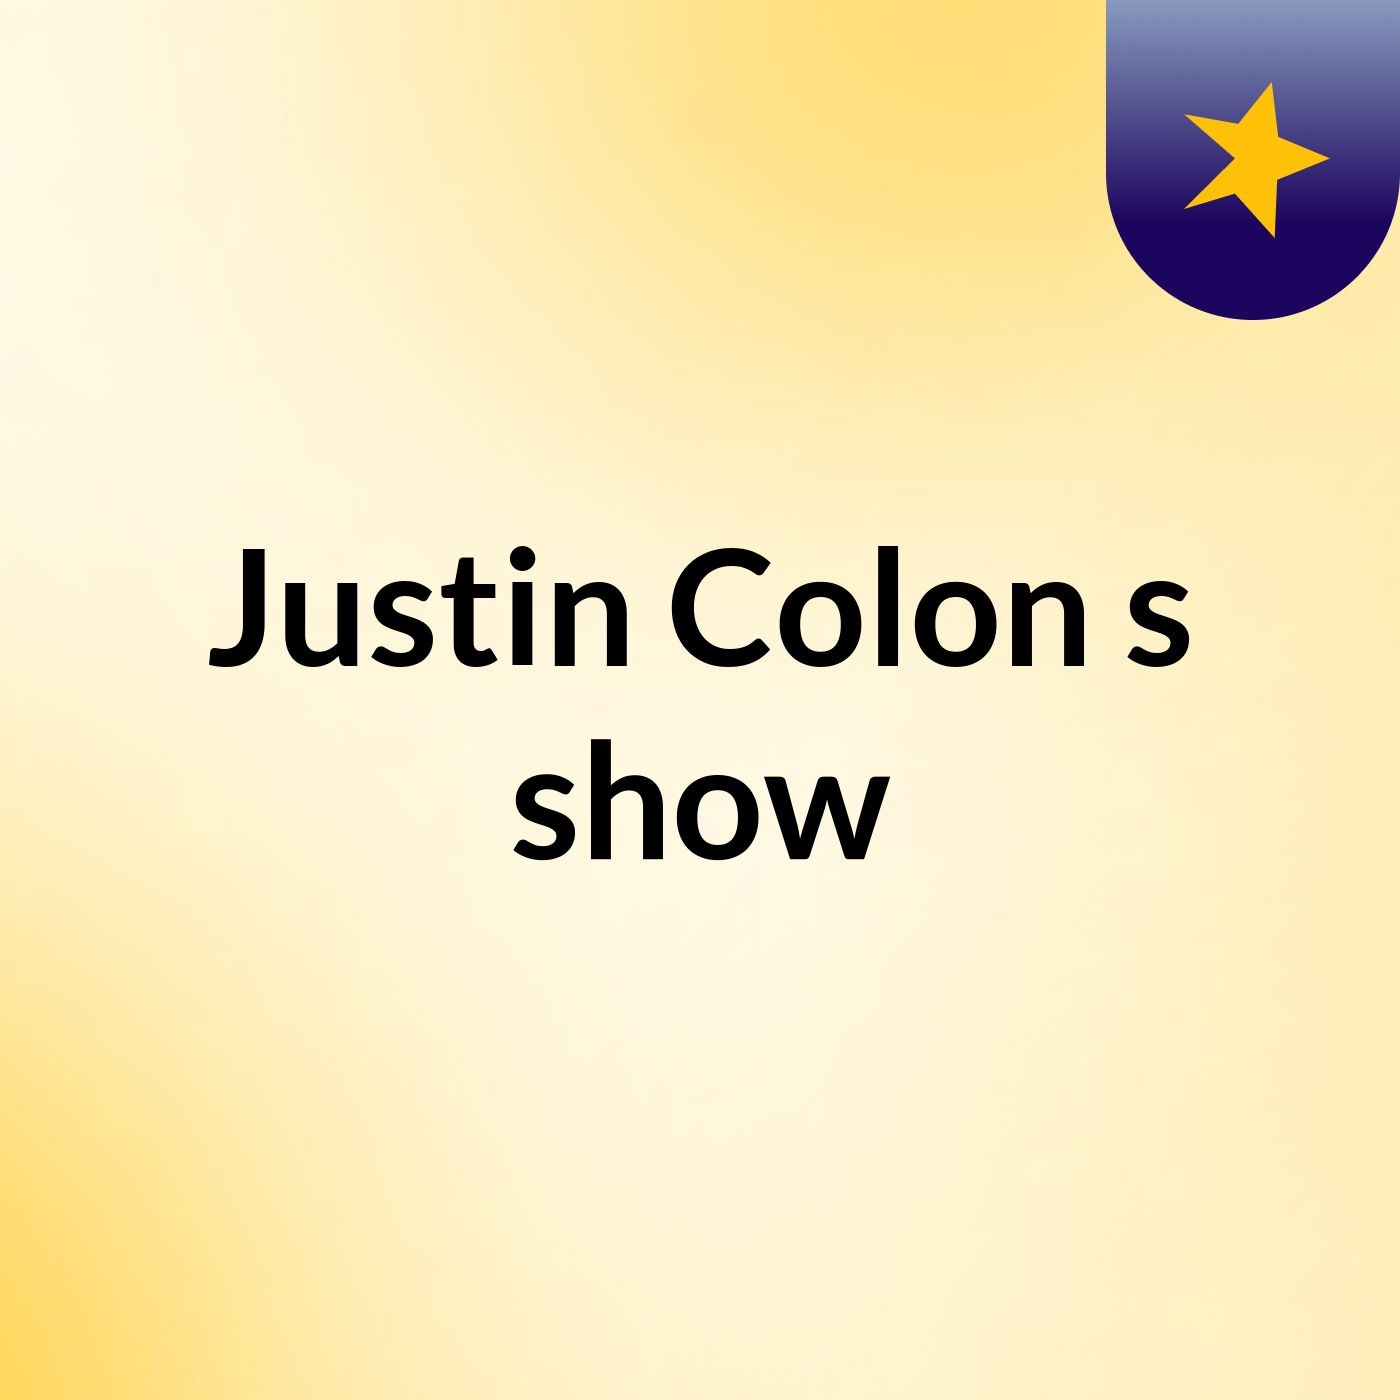 Episode 3 - Justin Colon's show